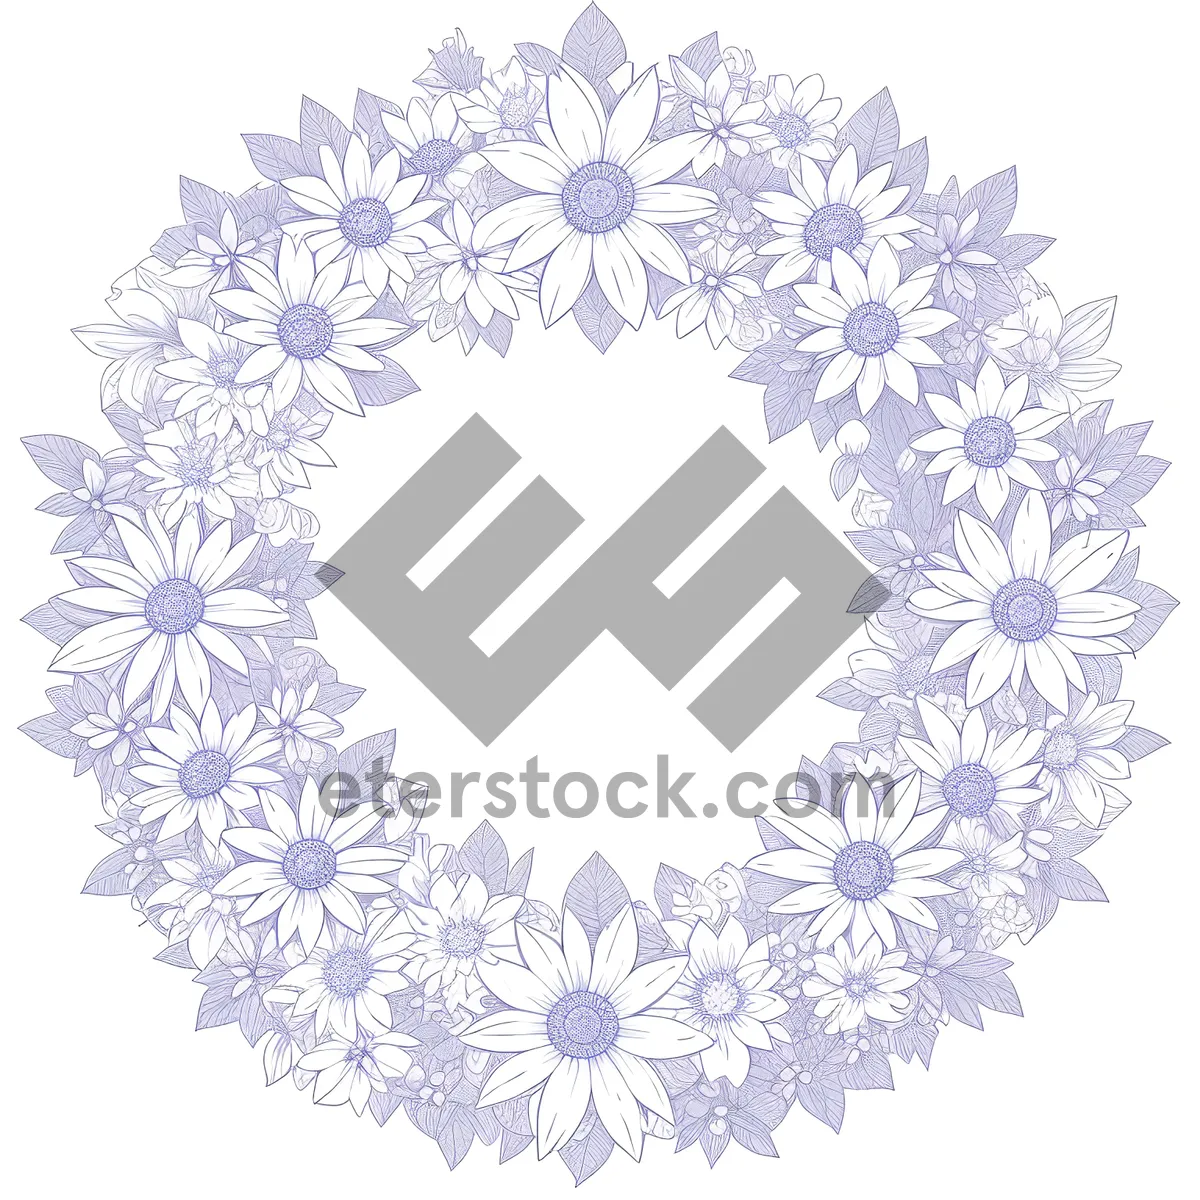 Picture of Snowflake Silhouette Symmetry - Decorative Winter Design